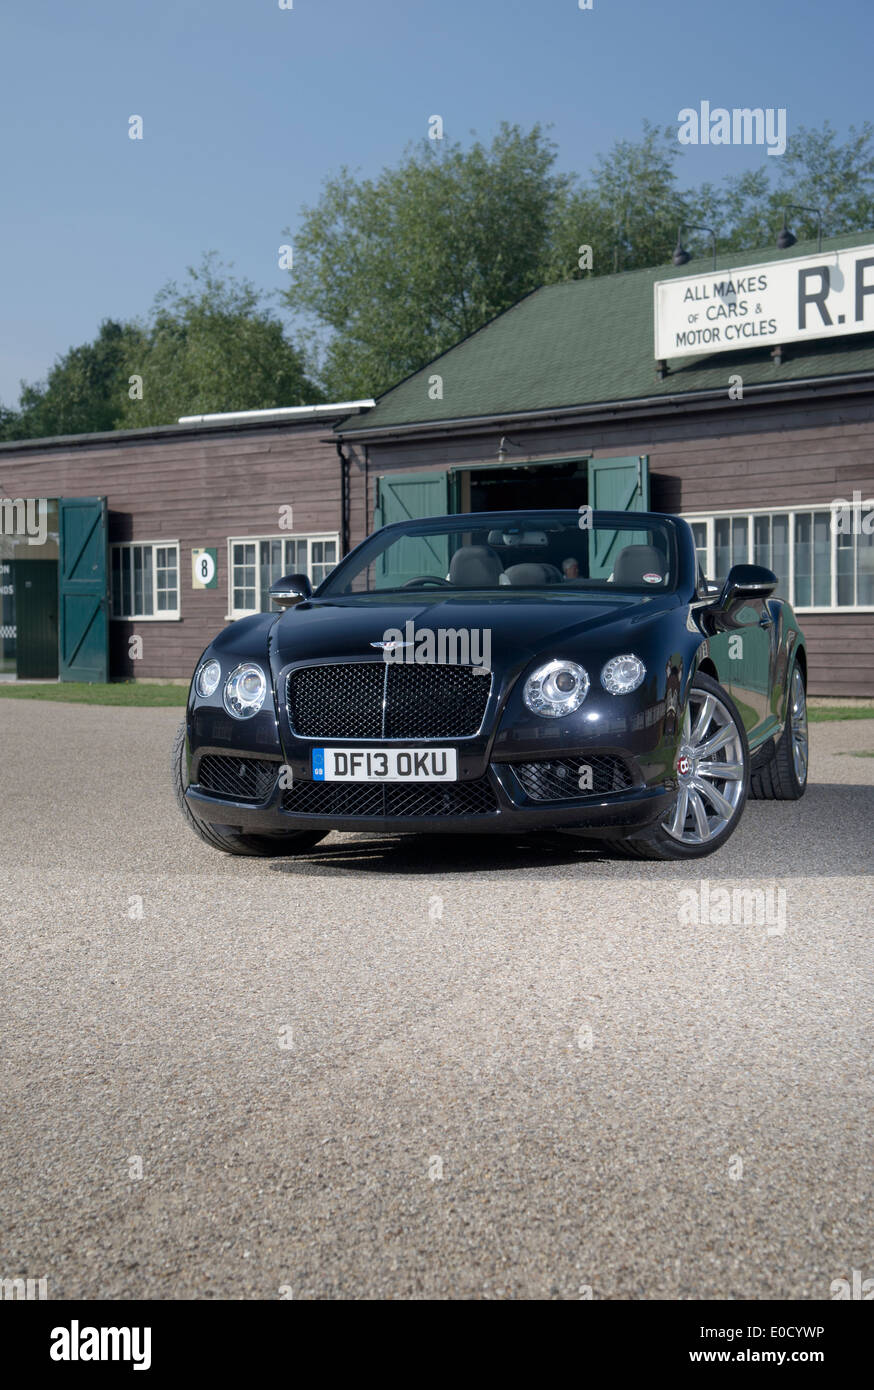 2013 Bentley GTC luxury British convertible car Stock Photo